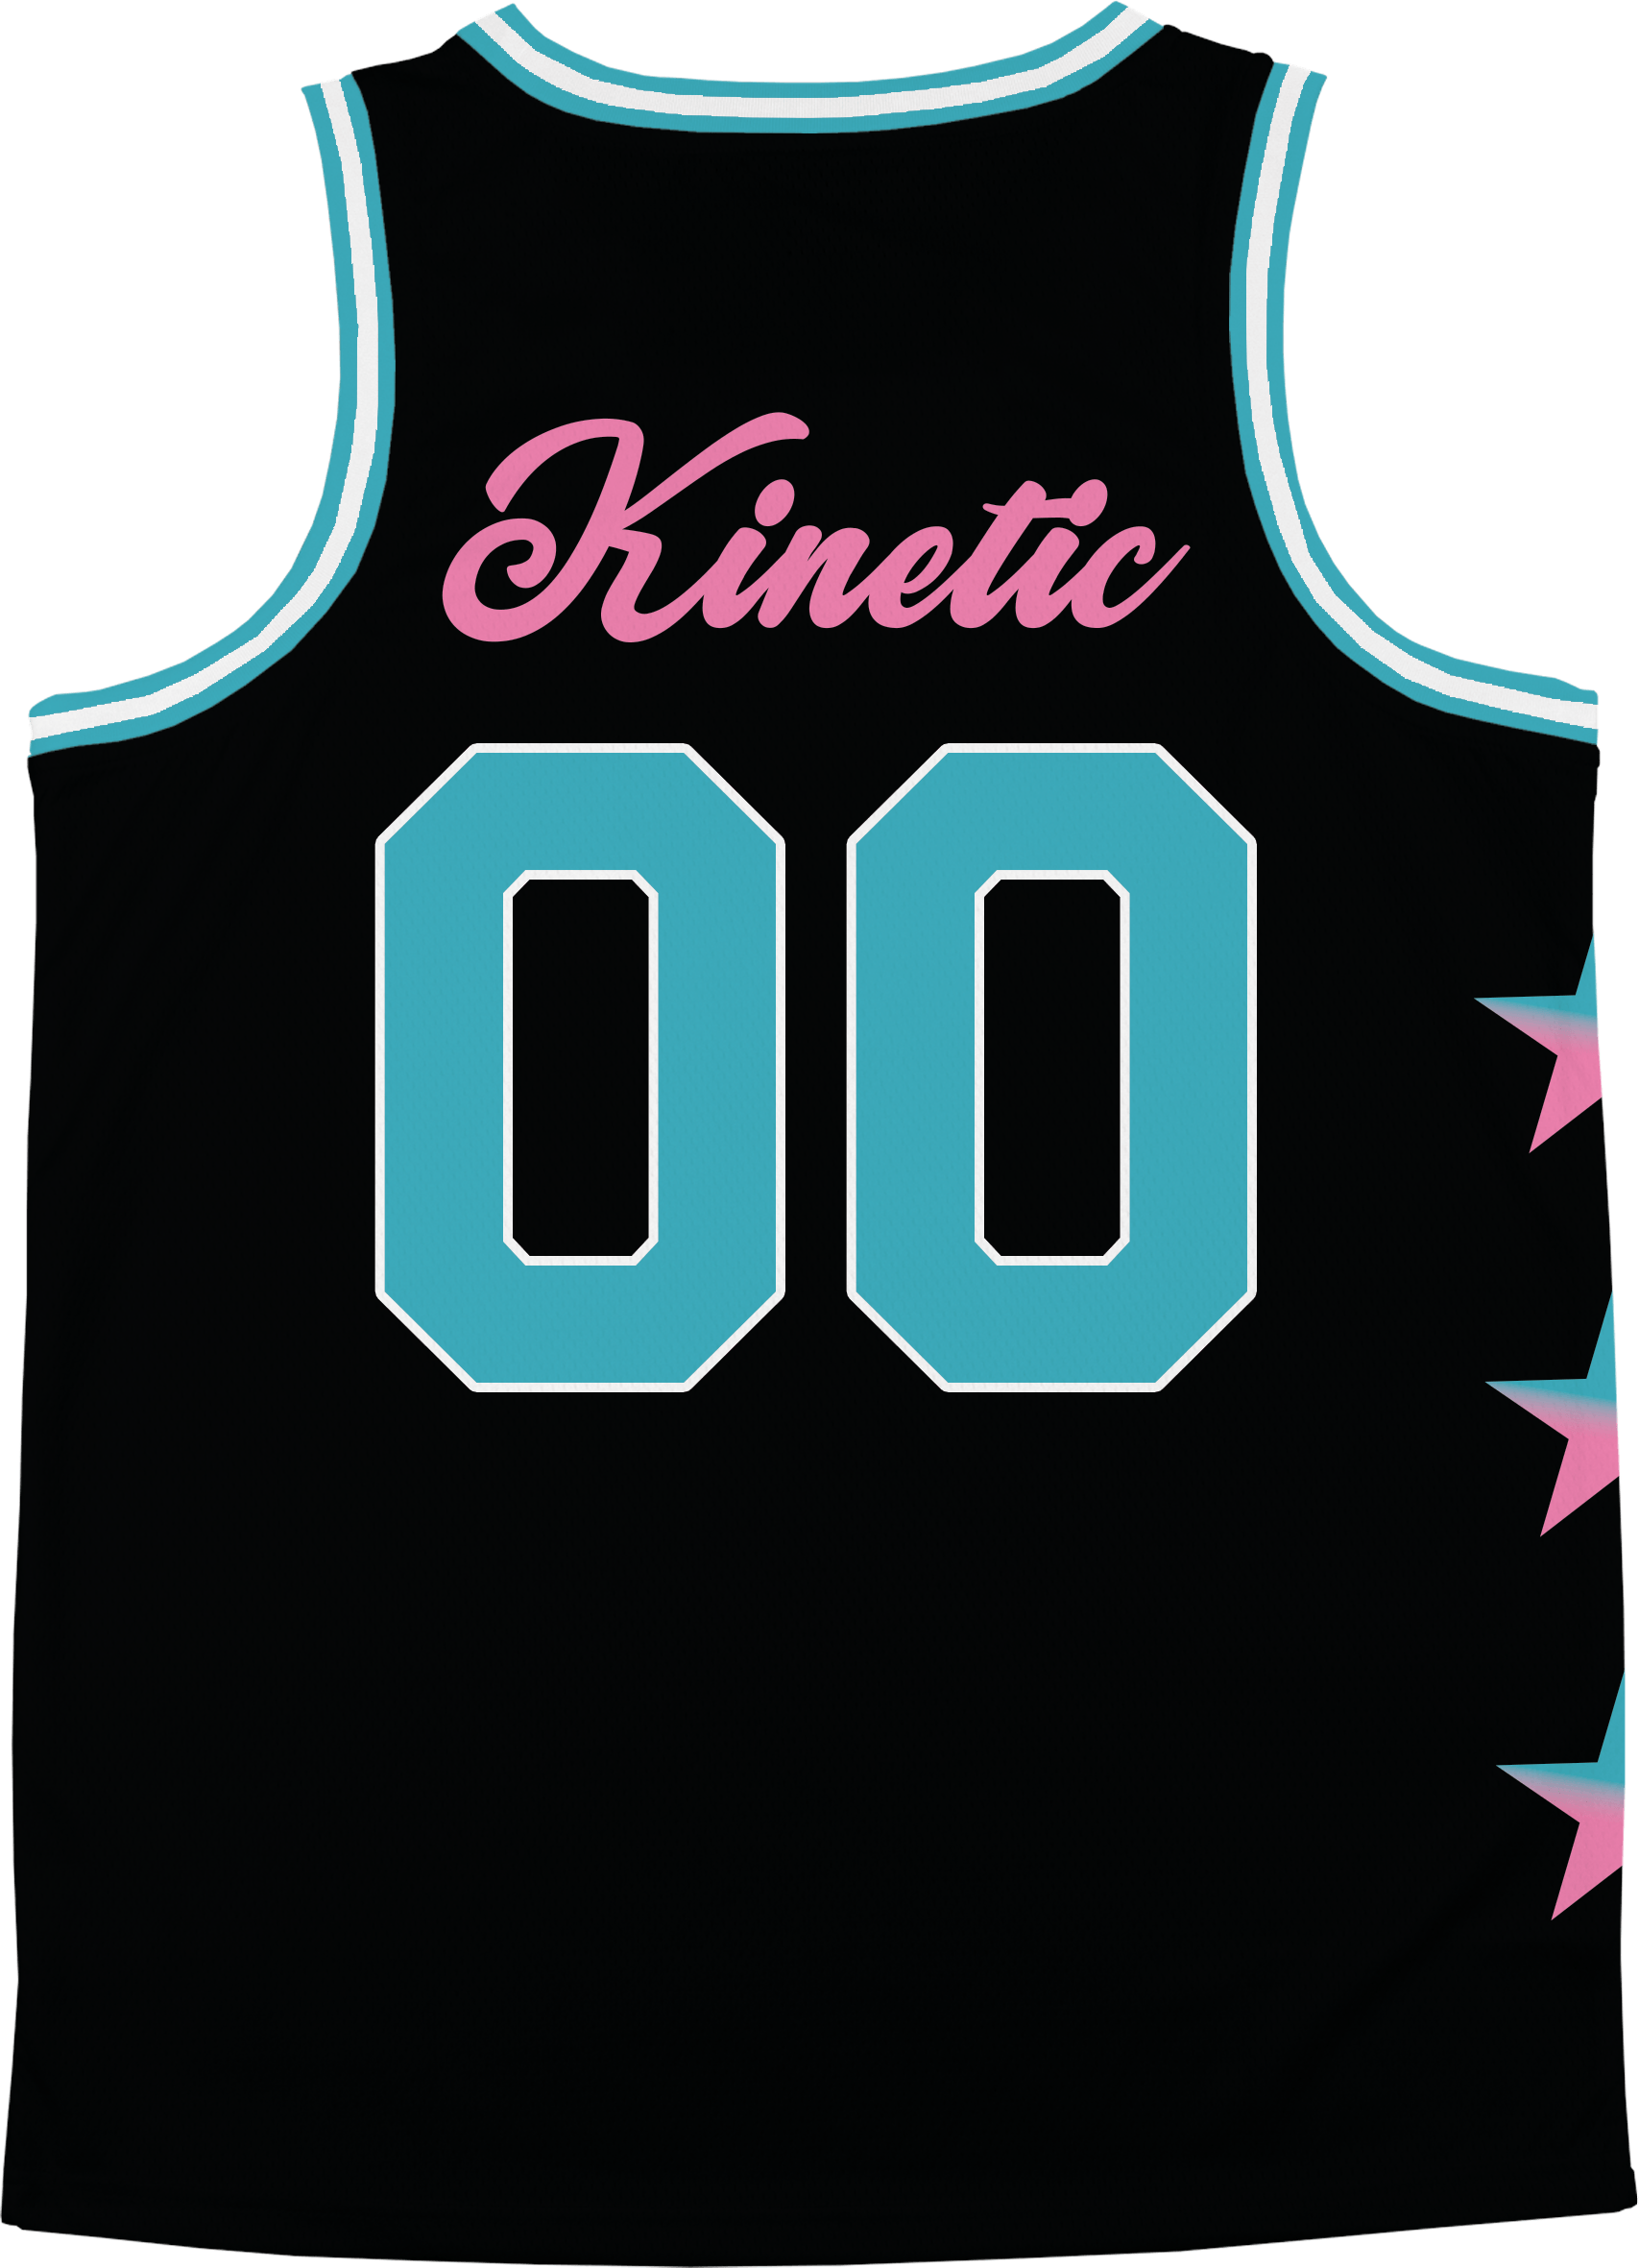 Beta Theta Pi - Cotton Candy Basketball Jersey Premium Basketball Kinetic Society LLC 